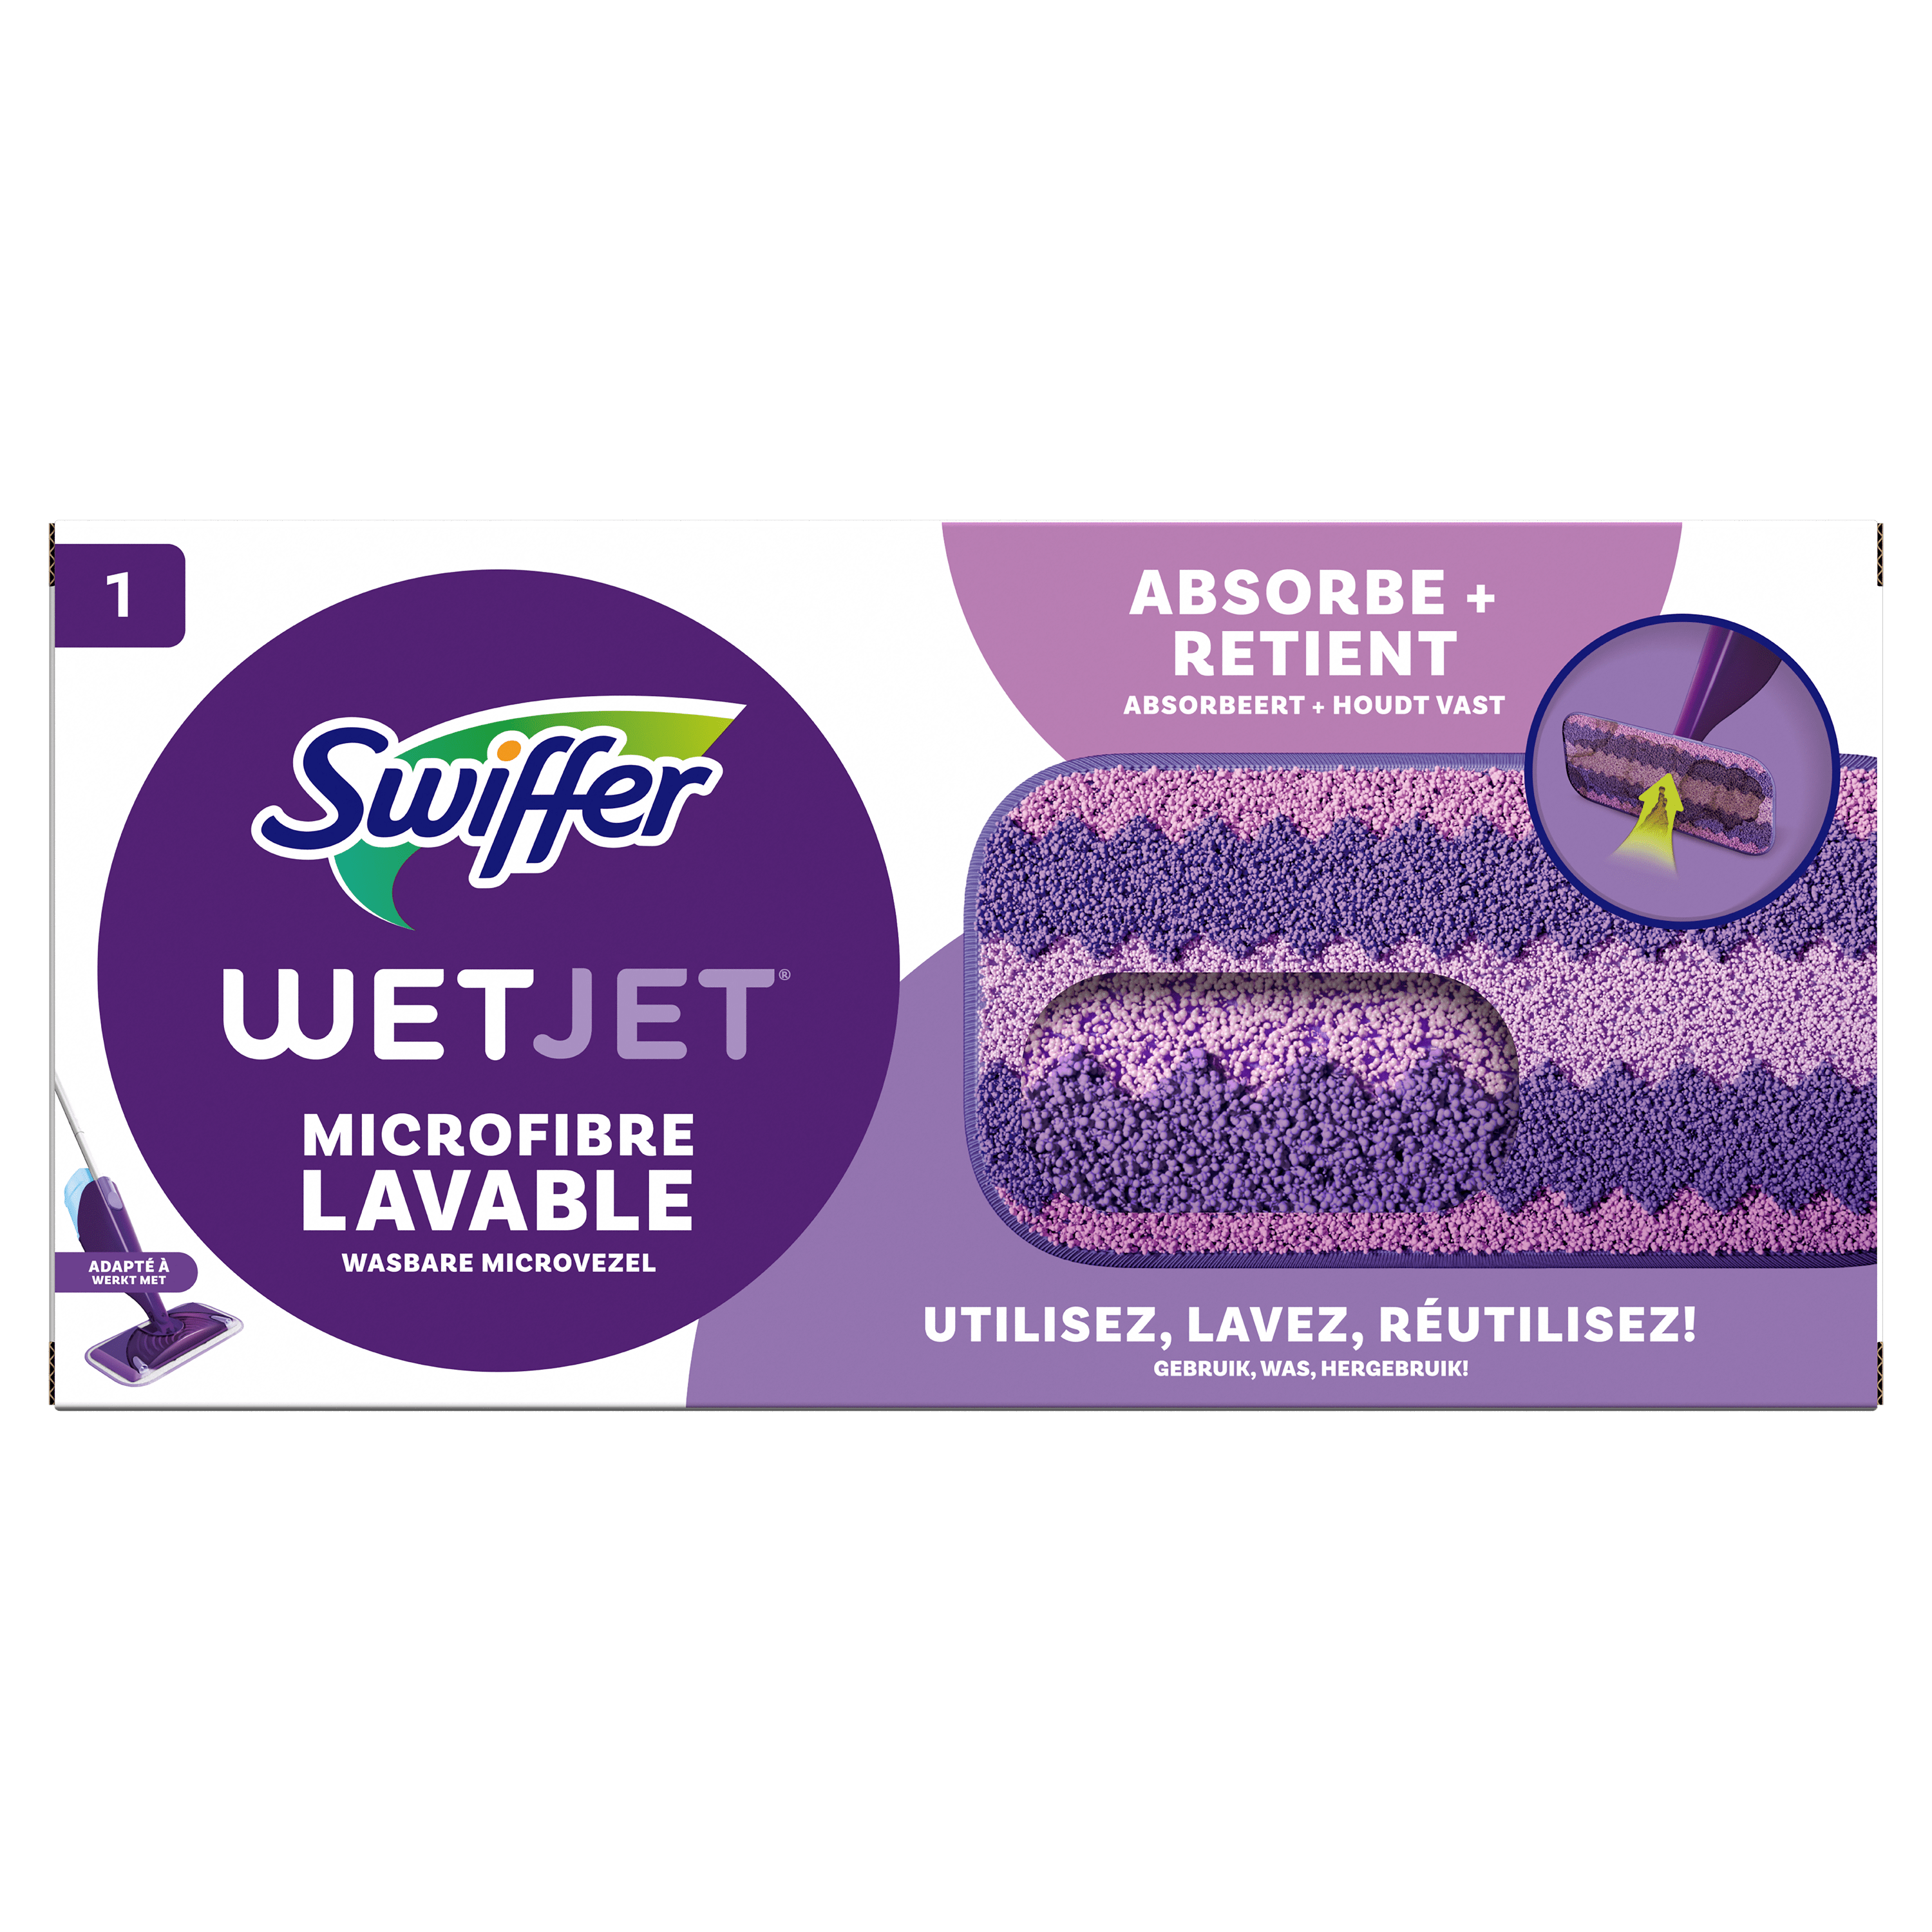 Swiffer Wetjet Microfibre lavable